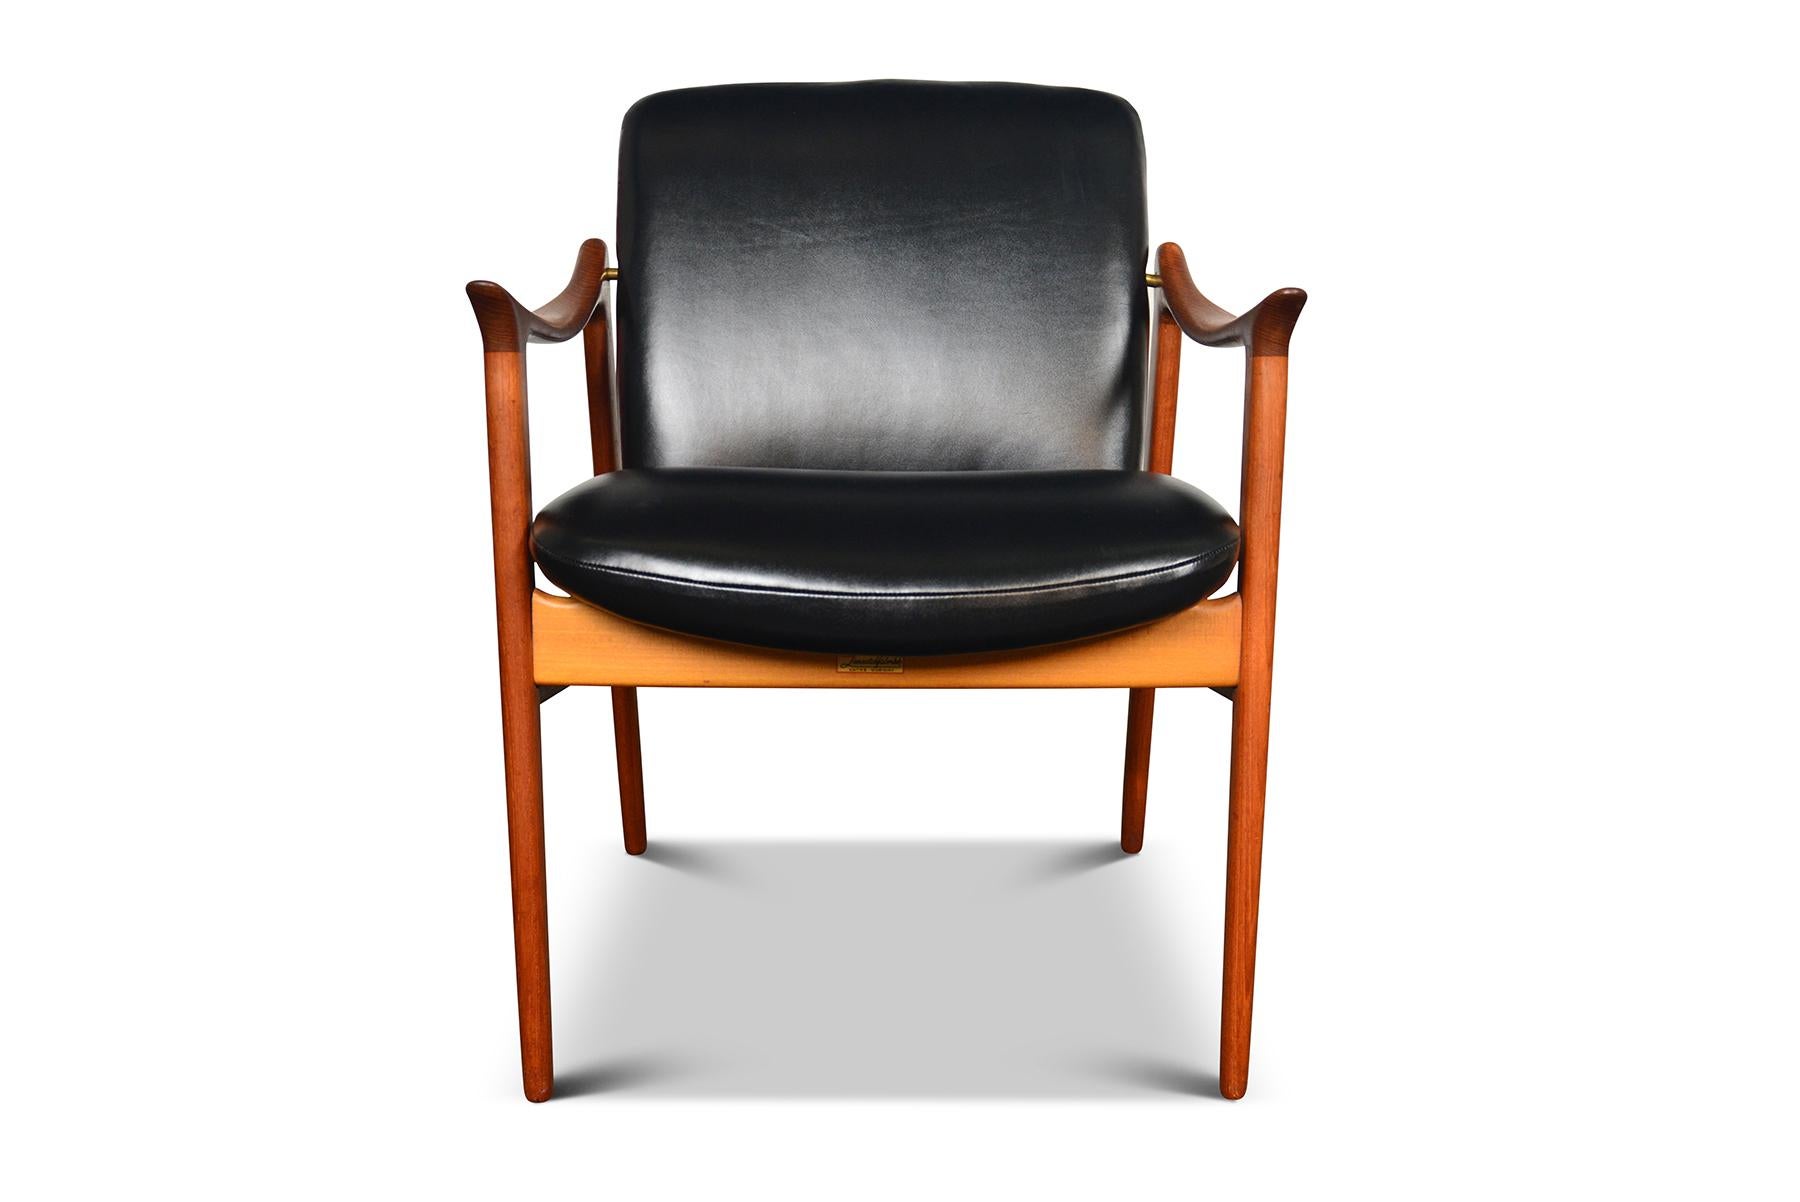 20th Century Fredrik Kayser Norwegian Teak Lounge Chair, Produced by Vatne